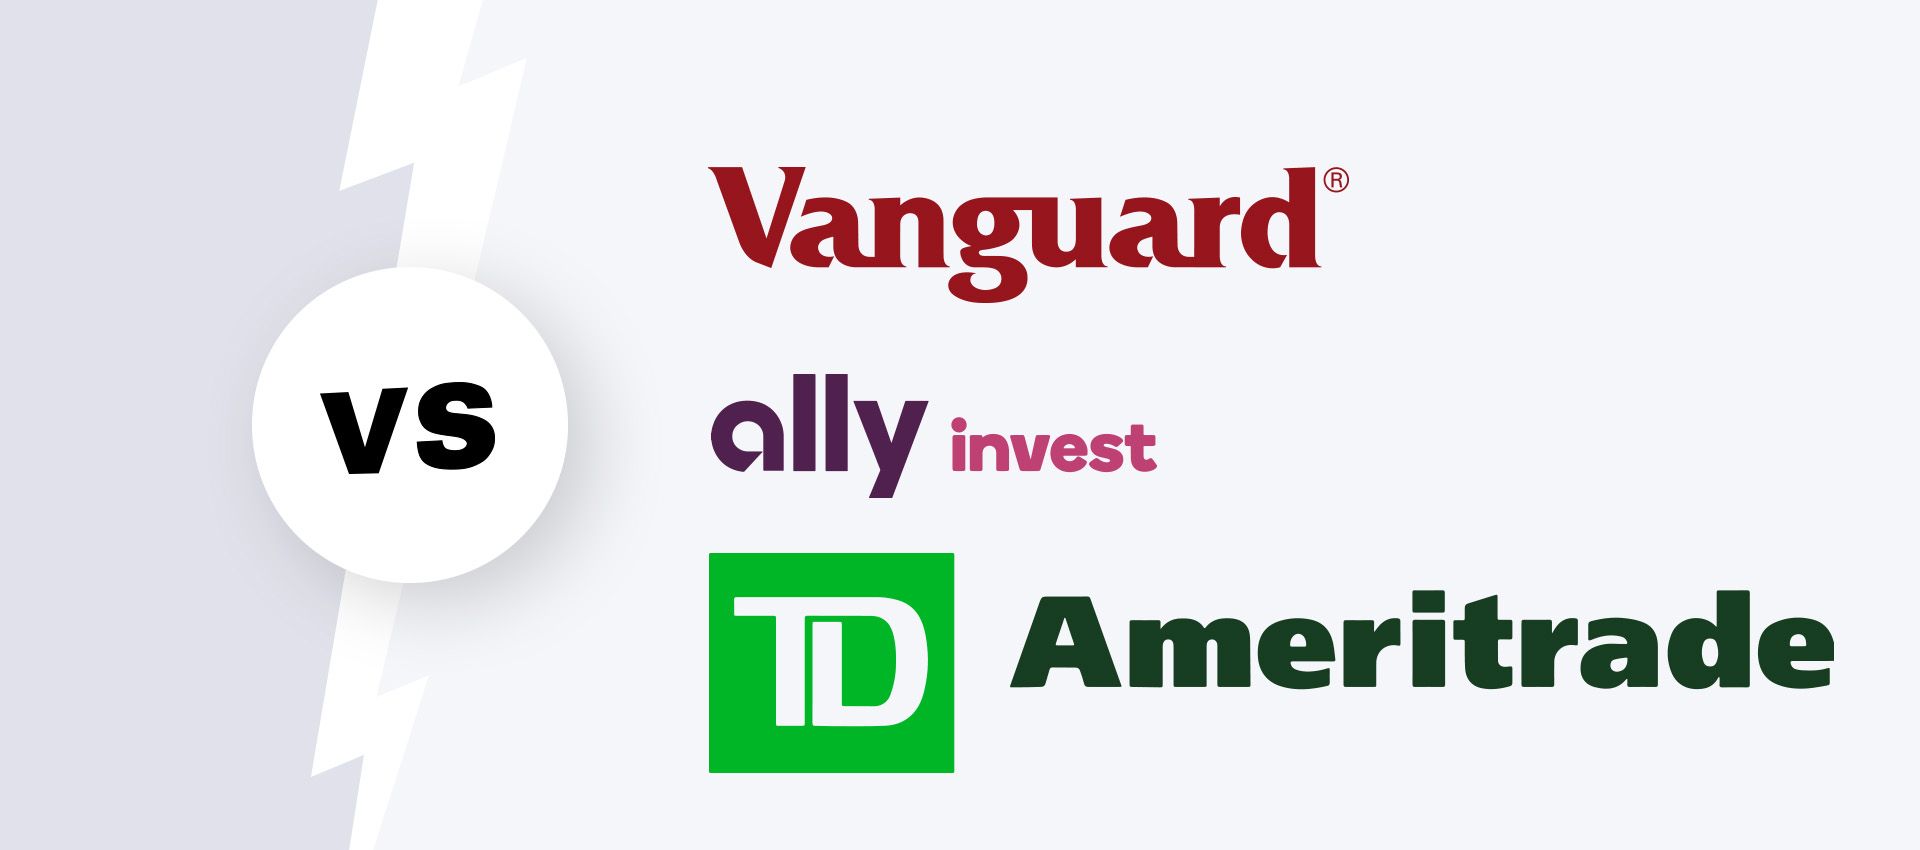 Vanguard vs. Ally invest vs. TD Ameritrade logos